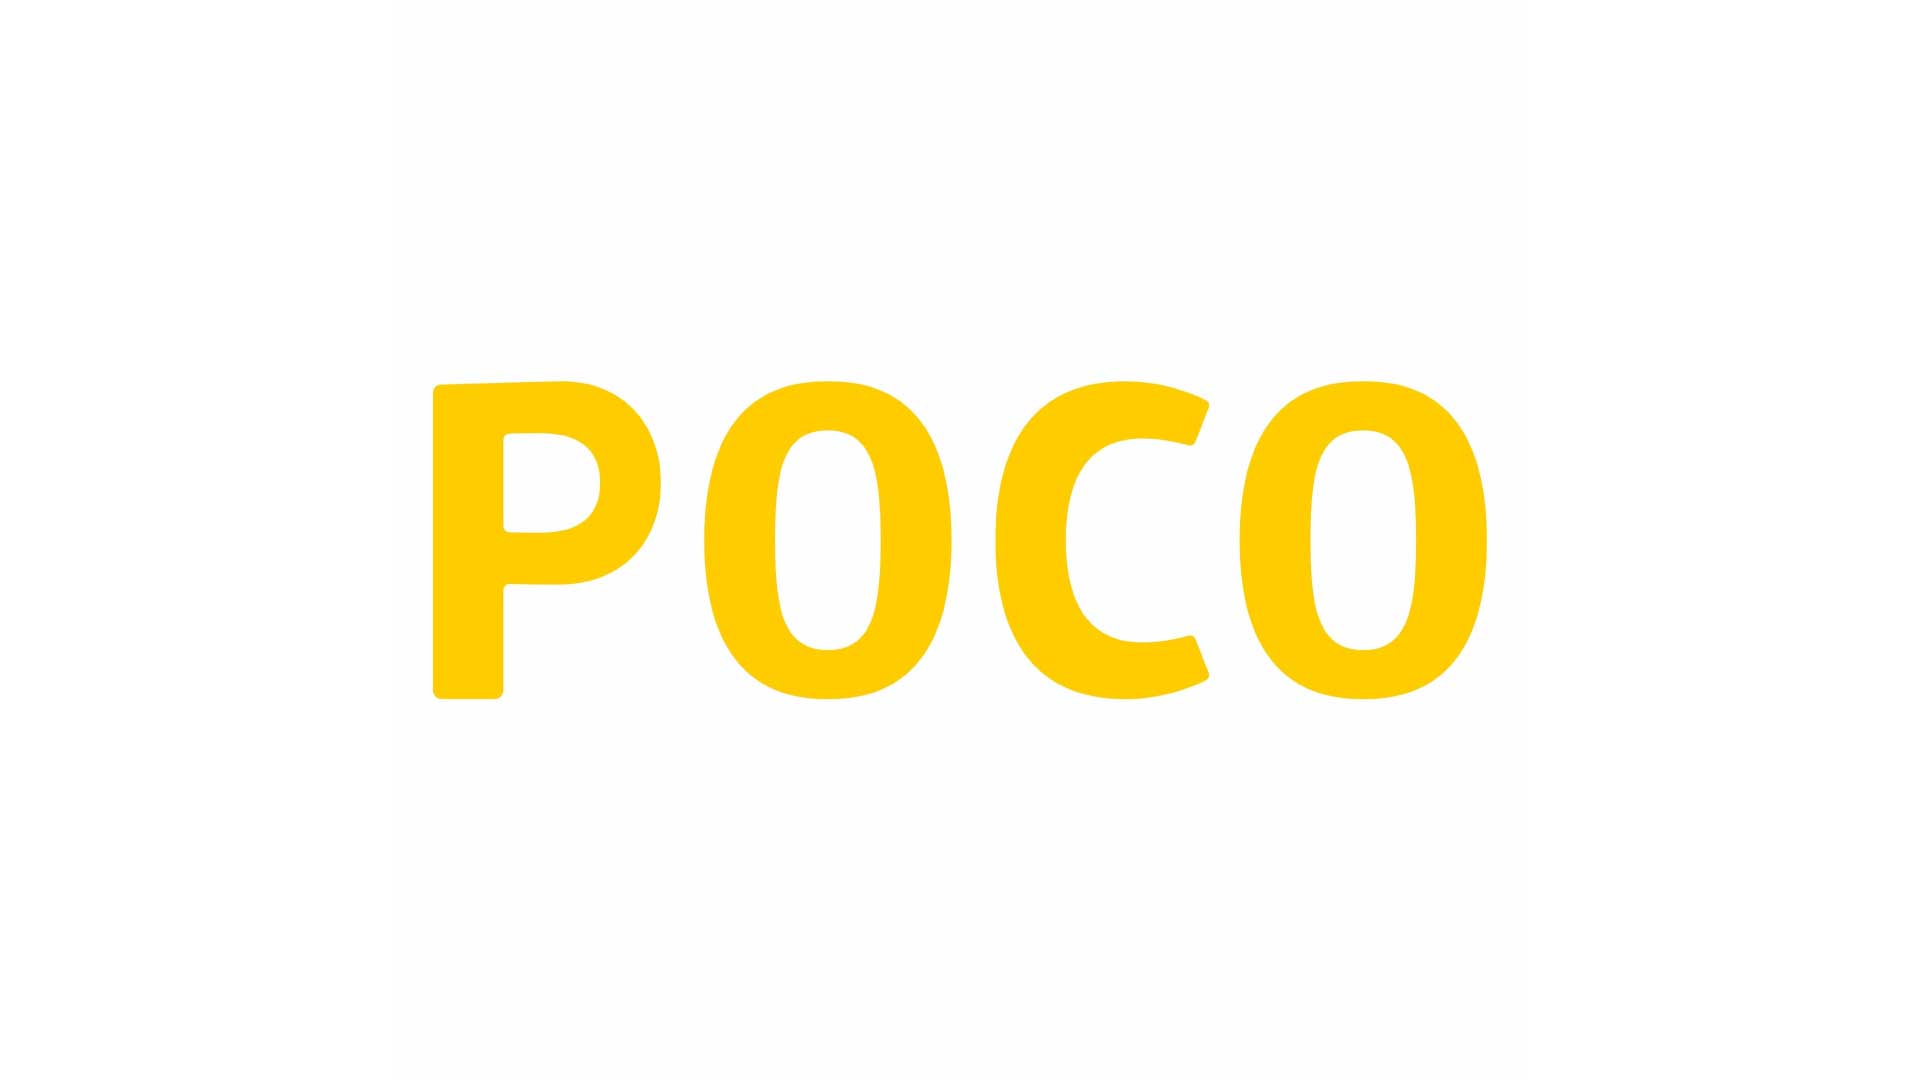 Poco Logo Featured Image for Poco F2